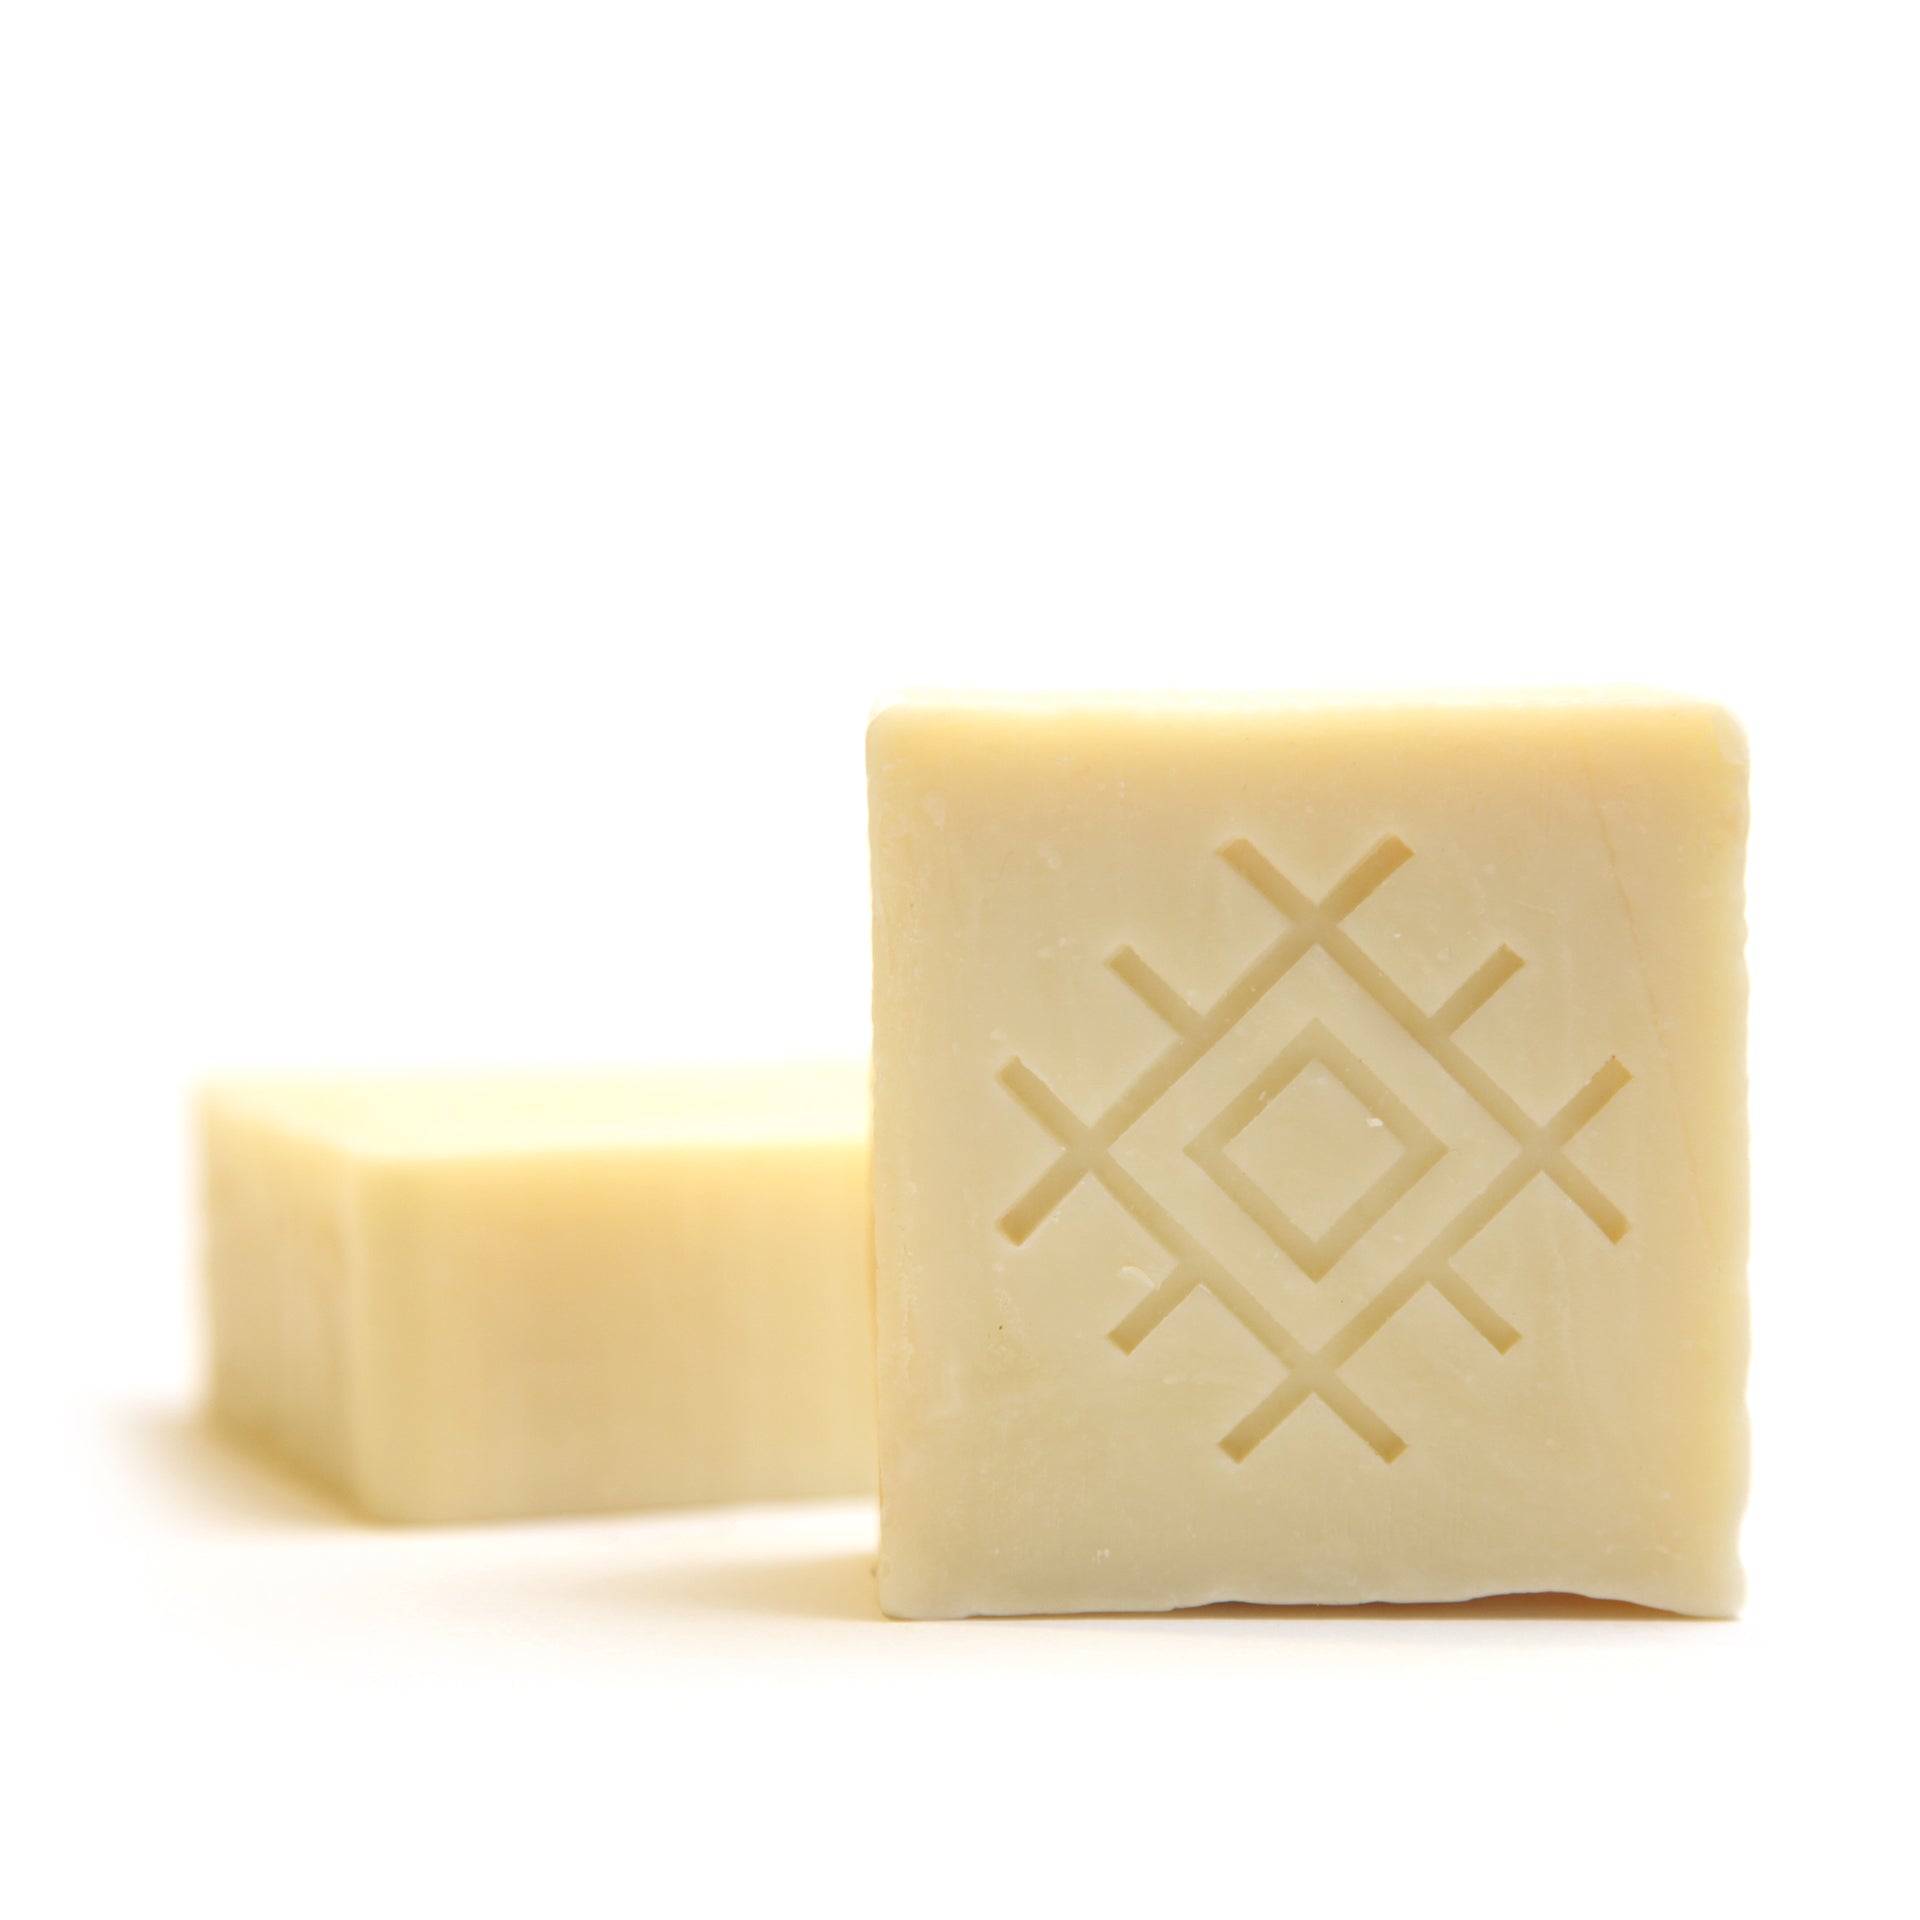 Sabun – Pıtrak (Kuru Cilt)          Soap – Cocklebur (Dry Skin)